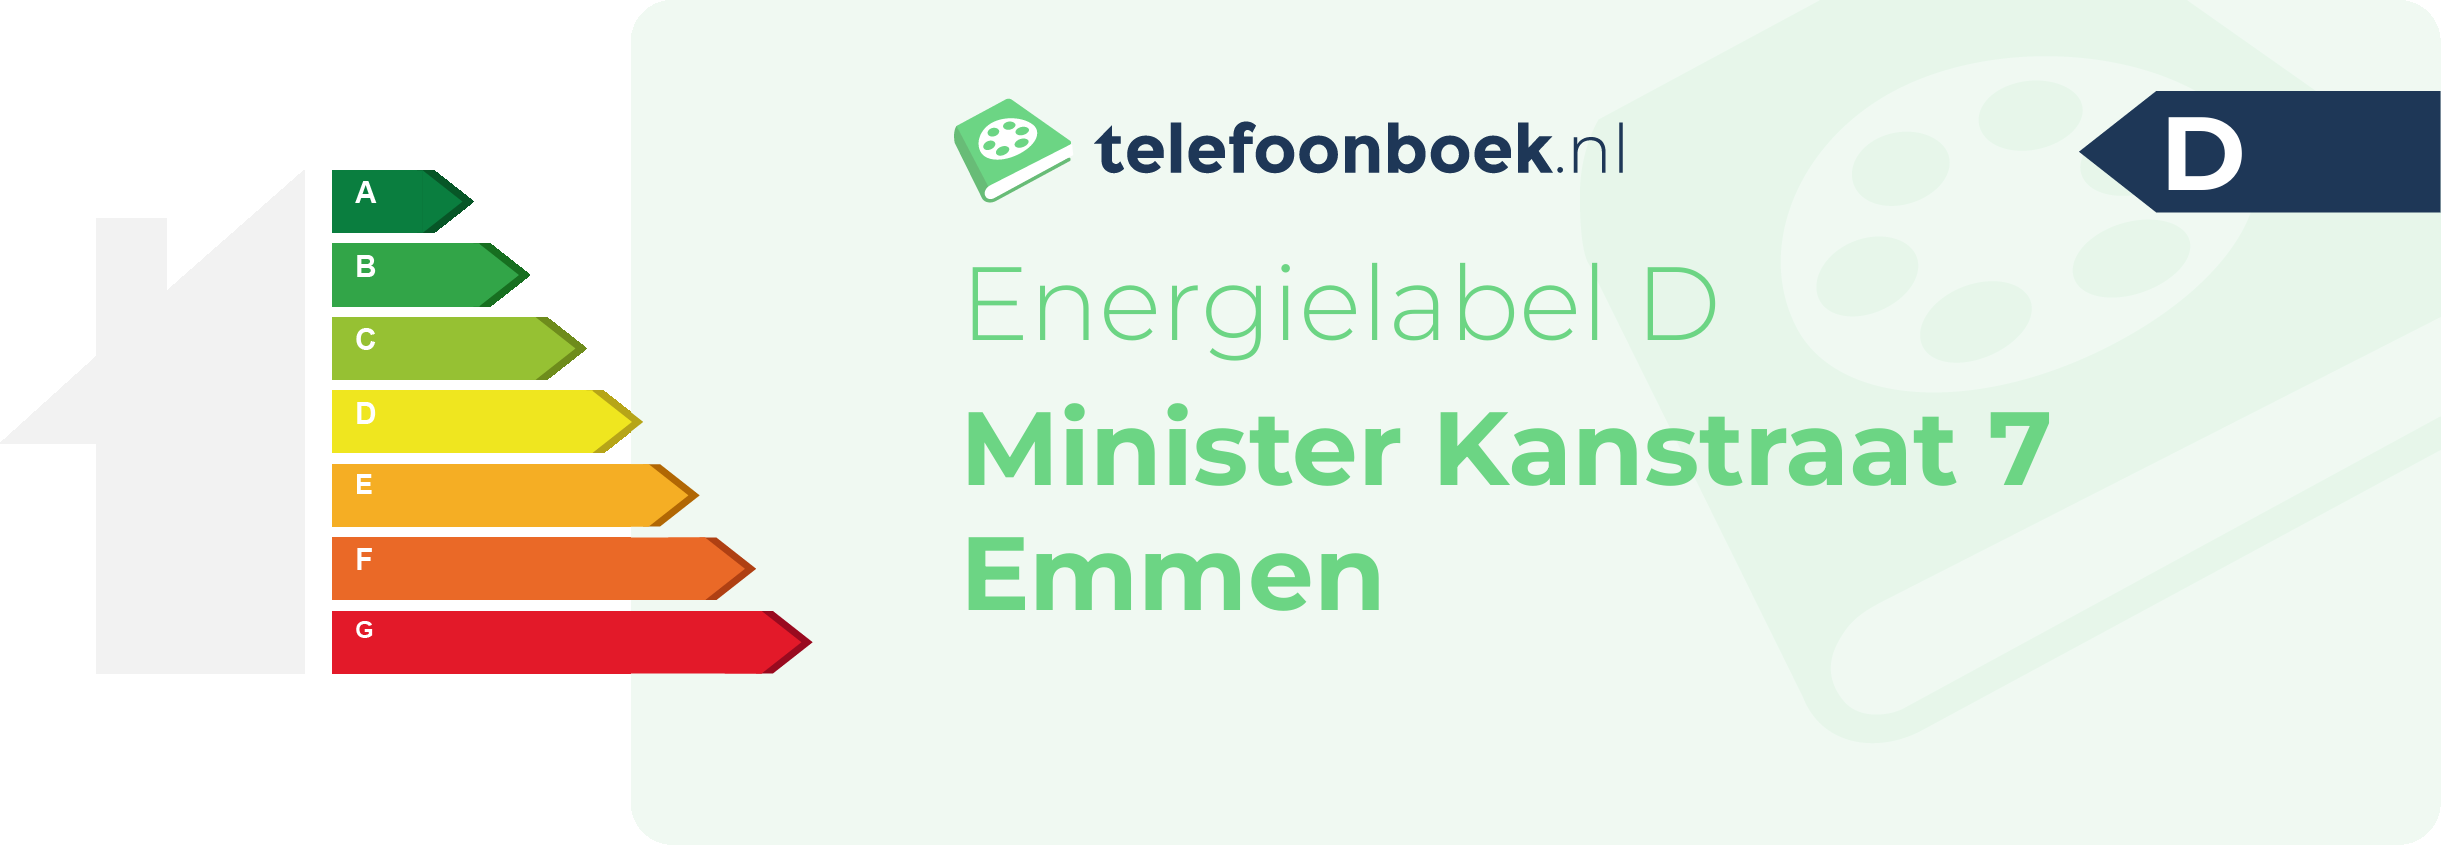 Energielabel Minister Kanstraat 7 Emmen